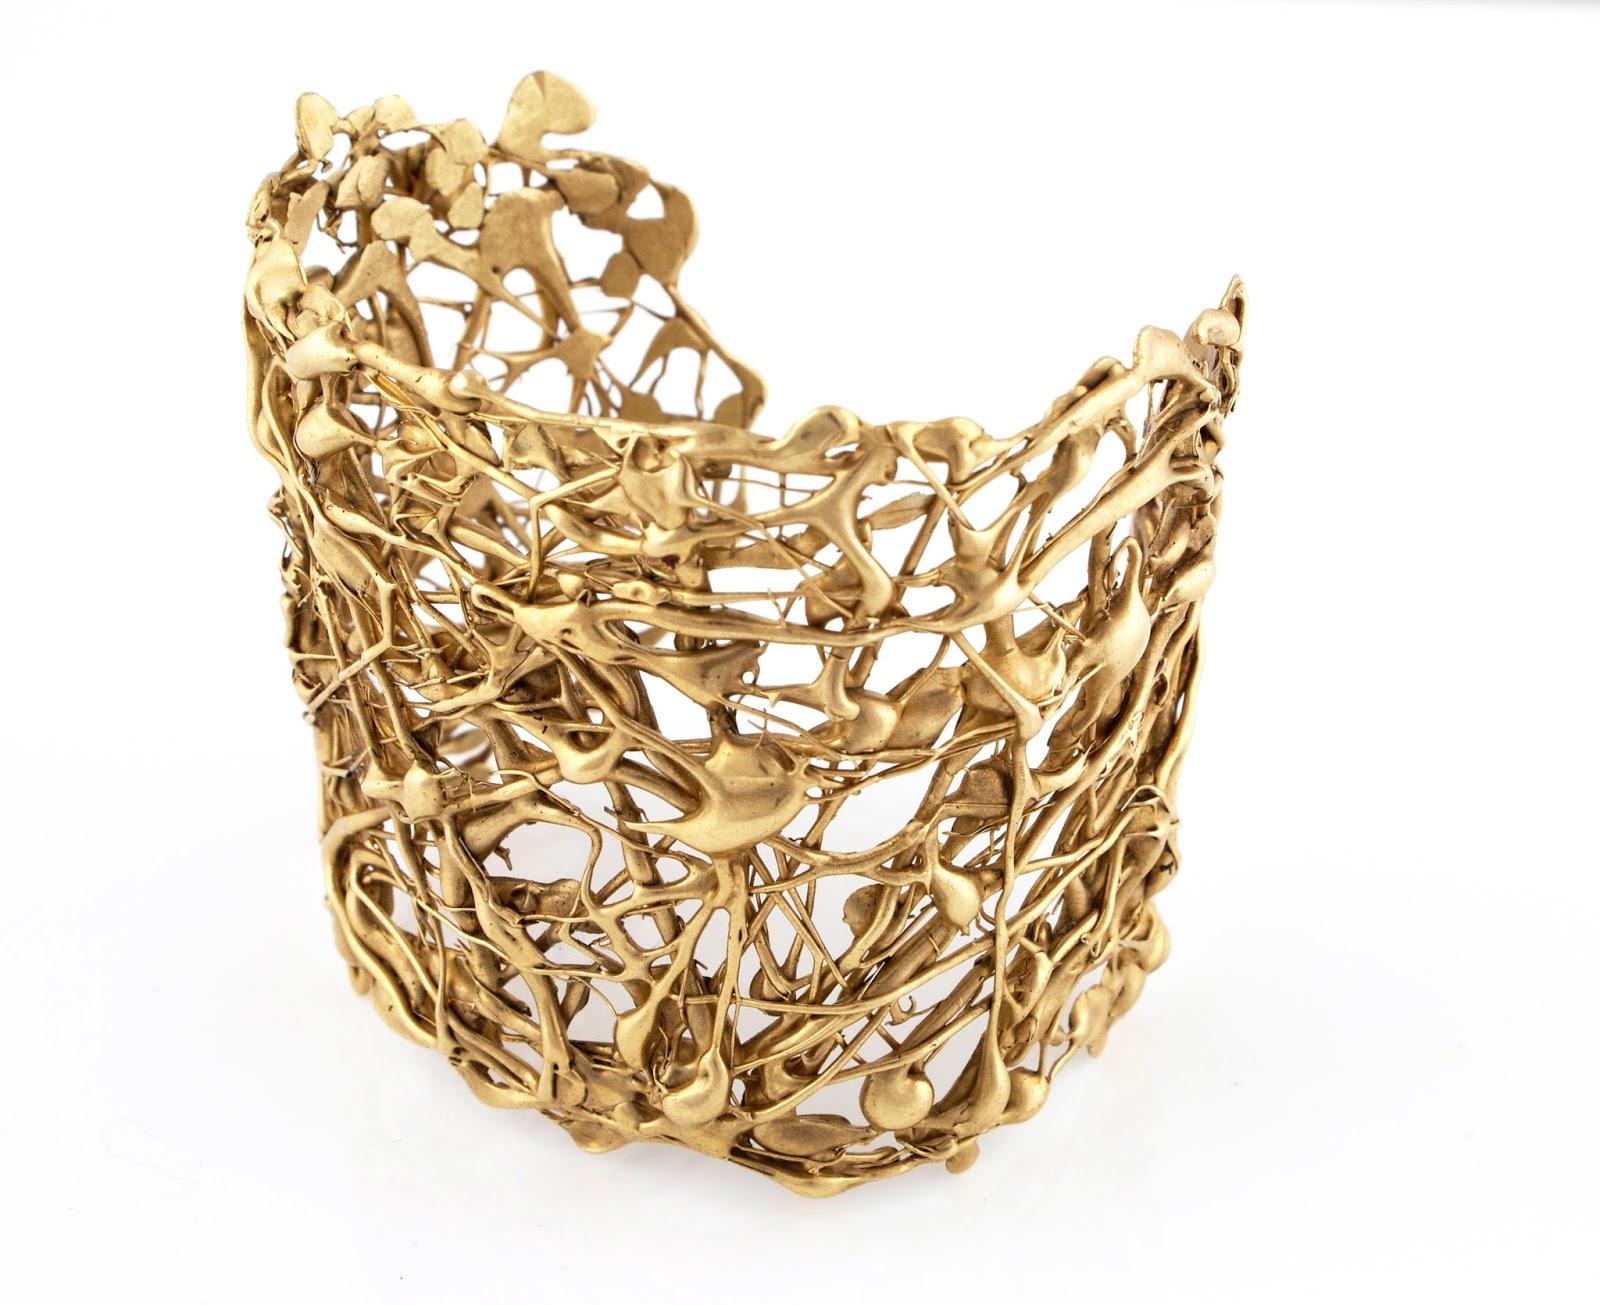 Lolo & Galago: Future Jewellery Designers to Watch